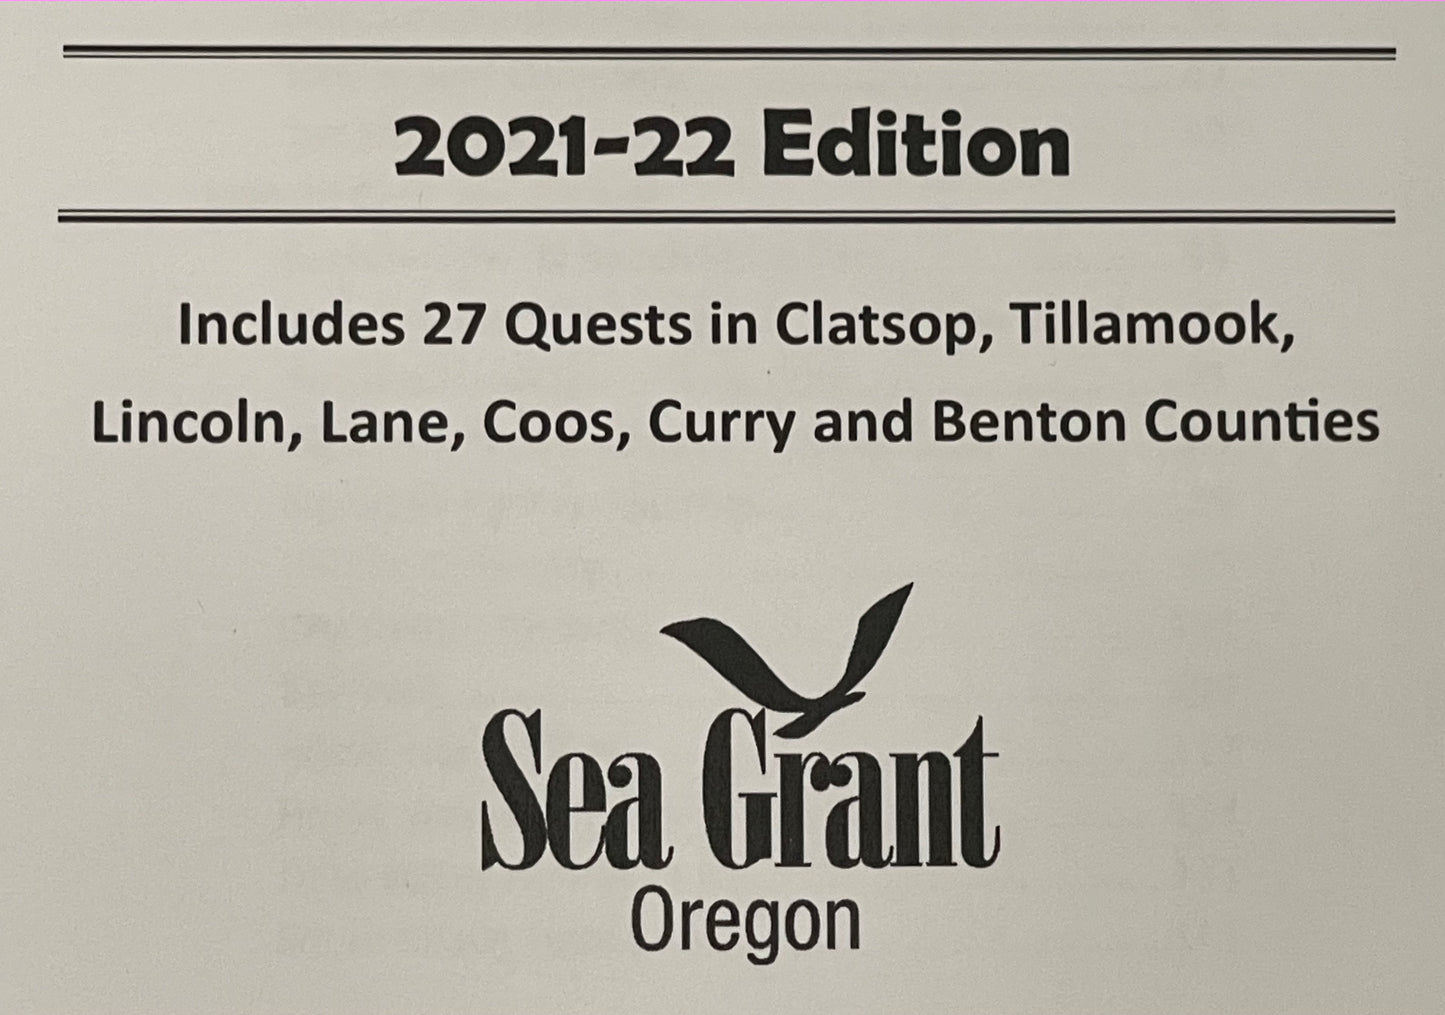 The Oregon Coast QUEST Book - Ed 2021-22